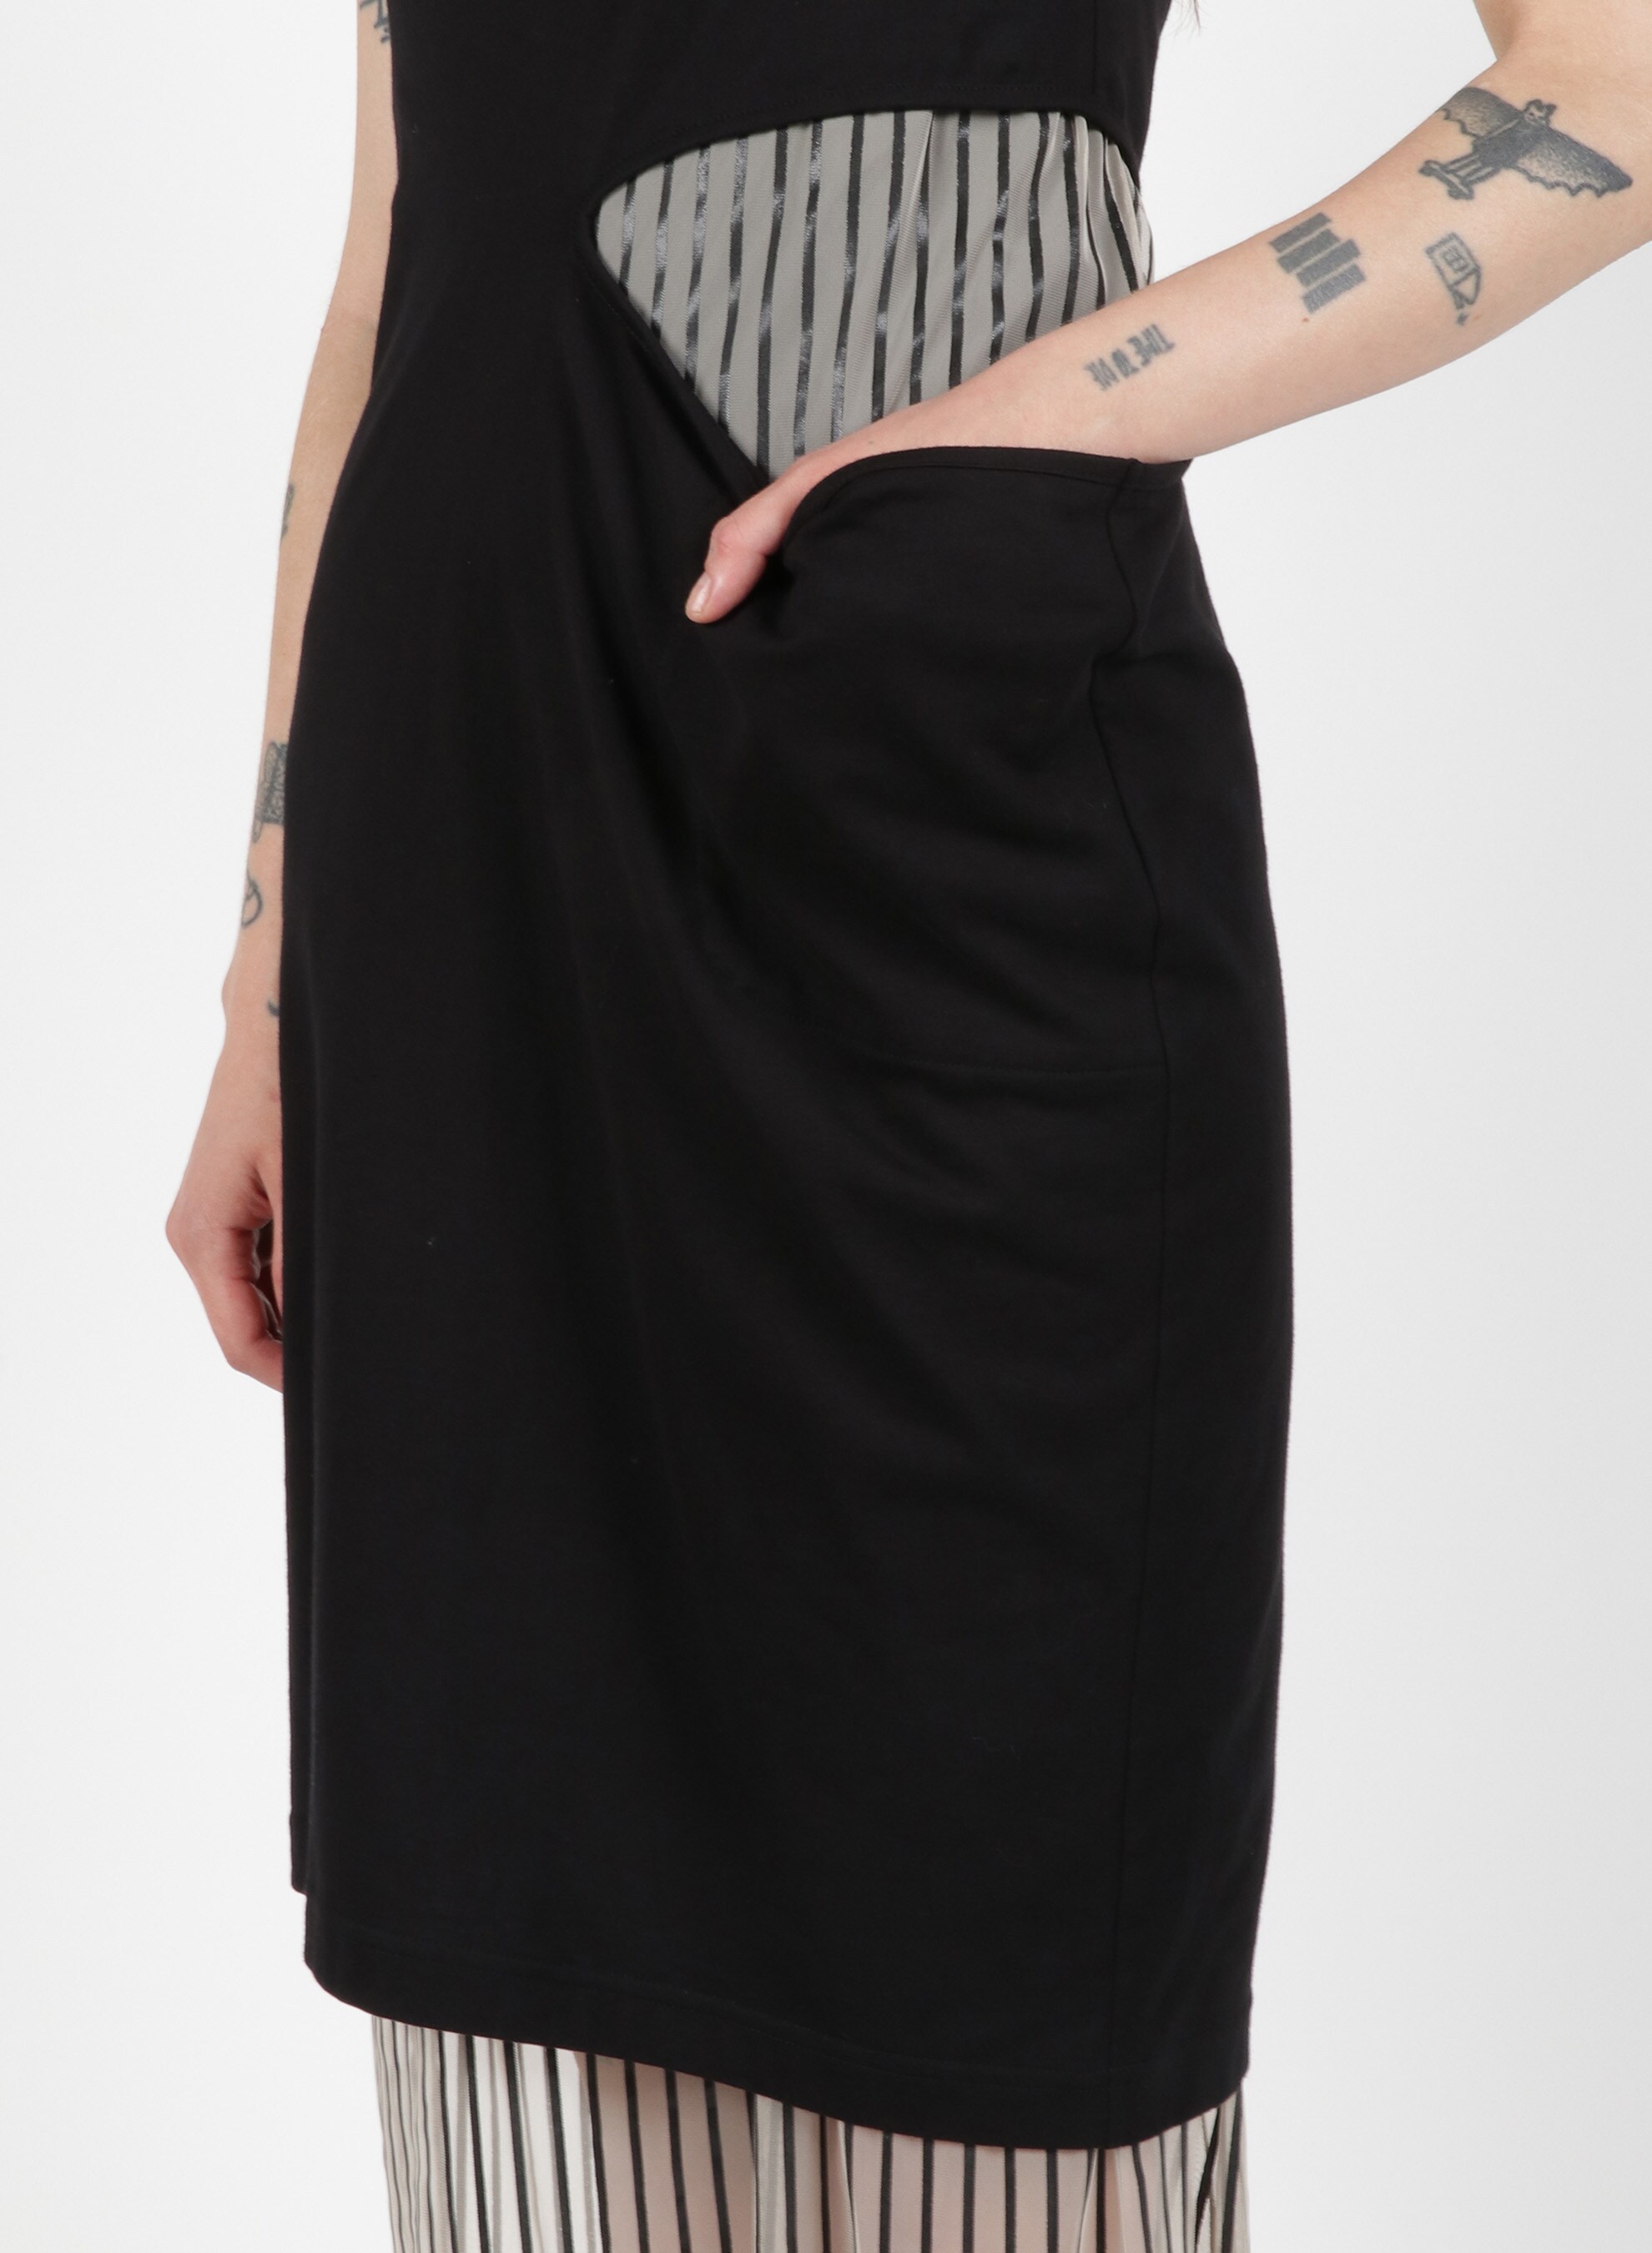 40/2C Soft PS+Stripe Print Layered Dress B